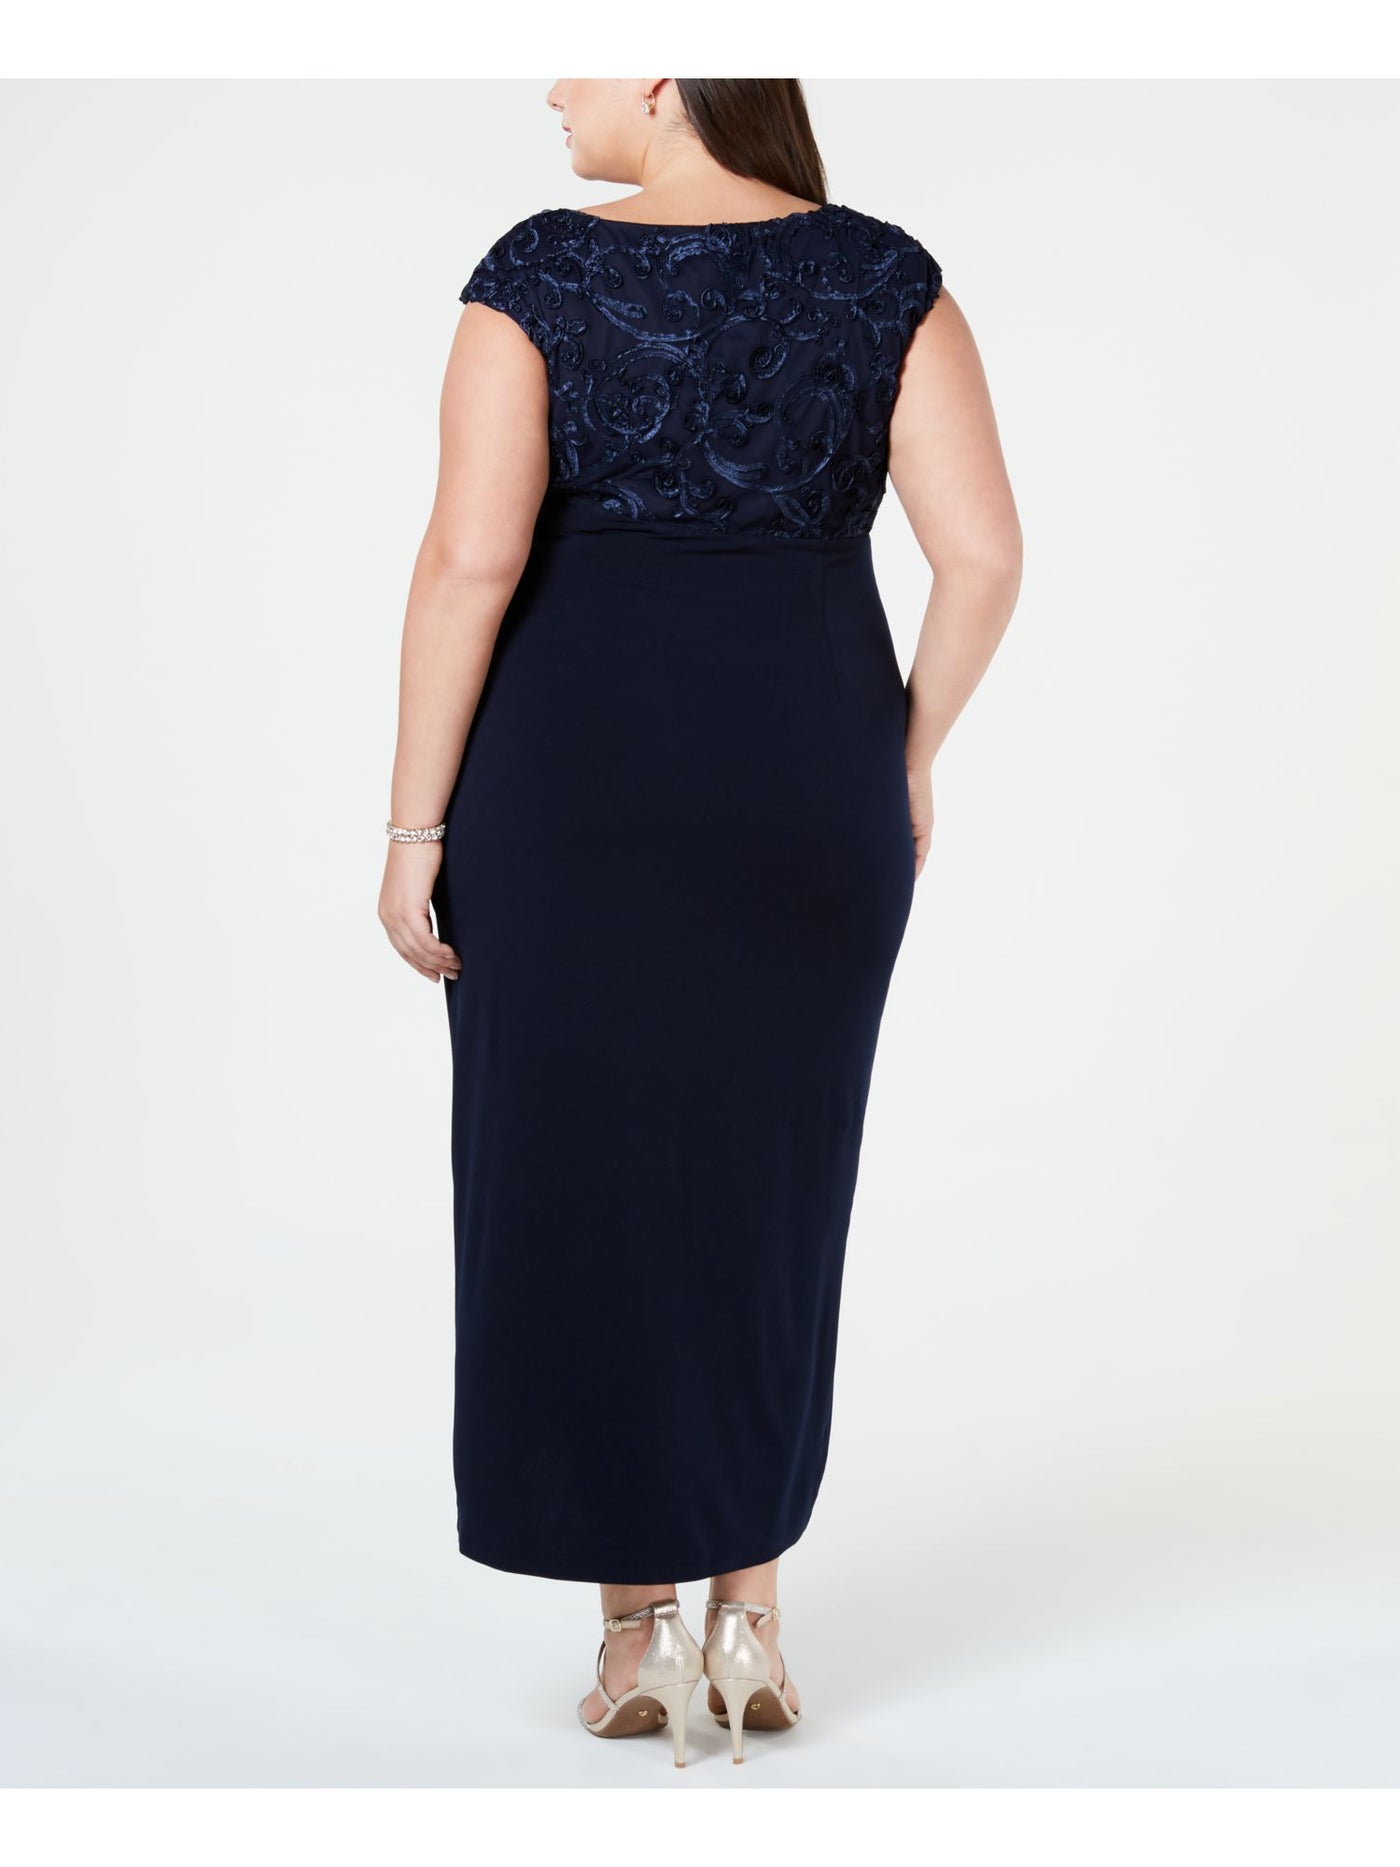 CONNECTED APPAREL Womens Navy Short Sleeve Jewel Neck Maxi Evening Hi-Lo Dress 24W